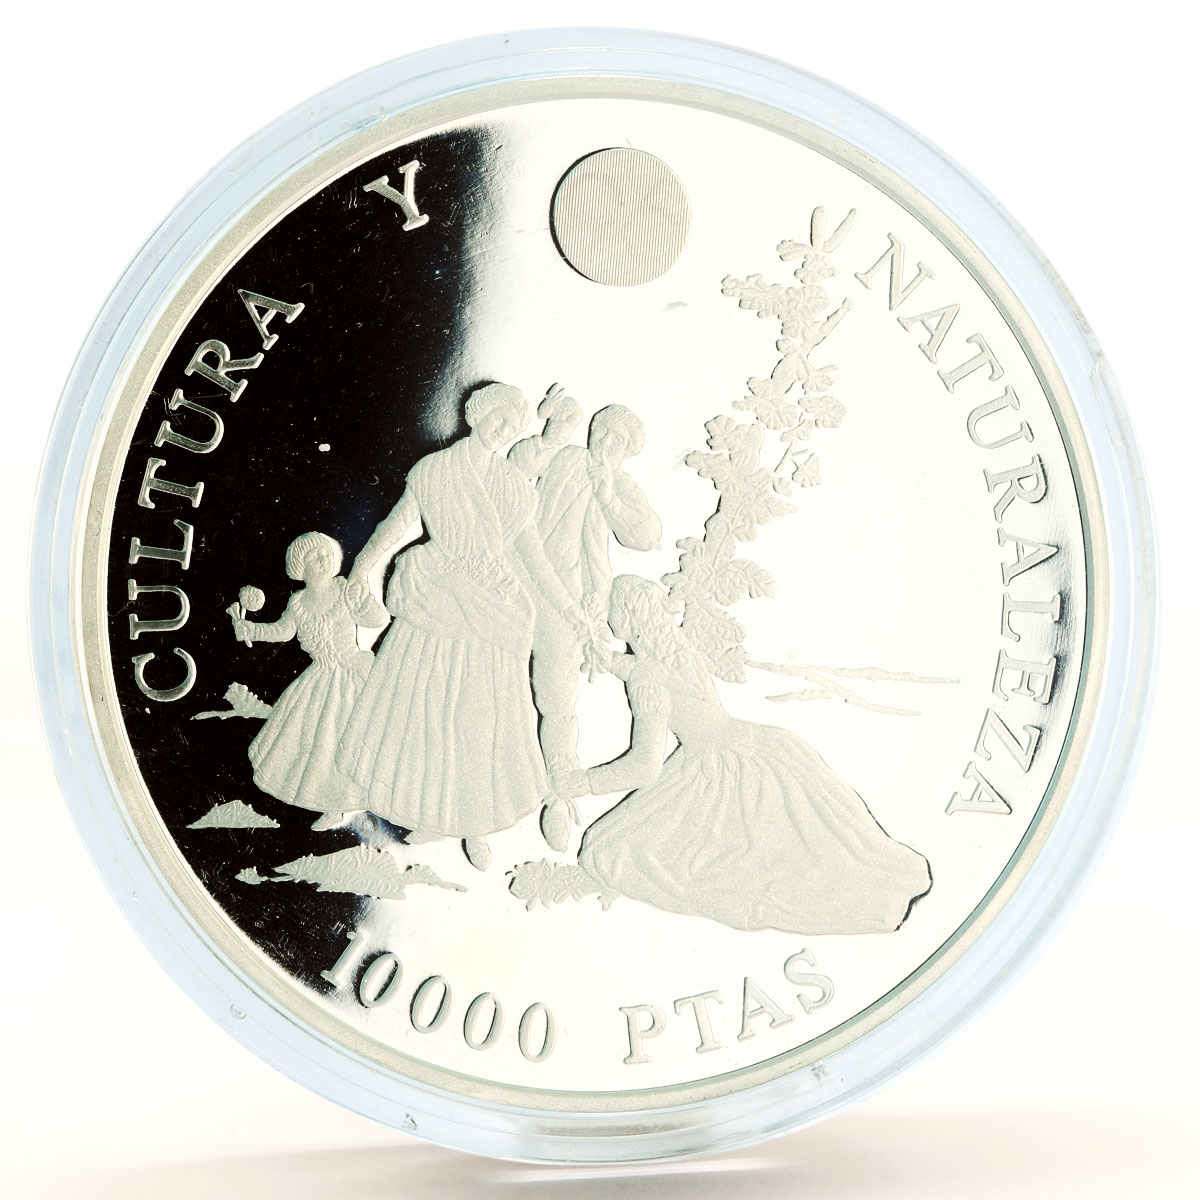 Spain 10000 pesetas Art series Naked Maja and Flower Pickers silver coin 1996